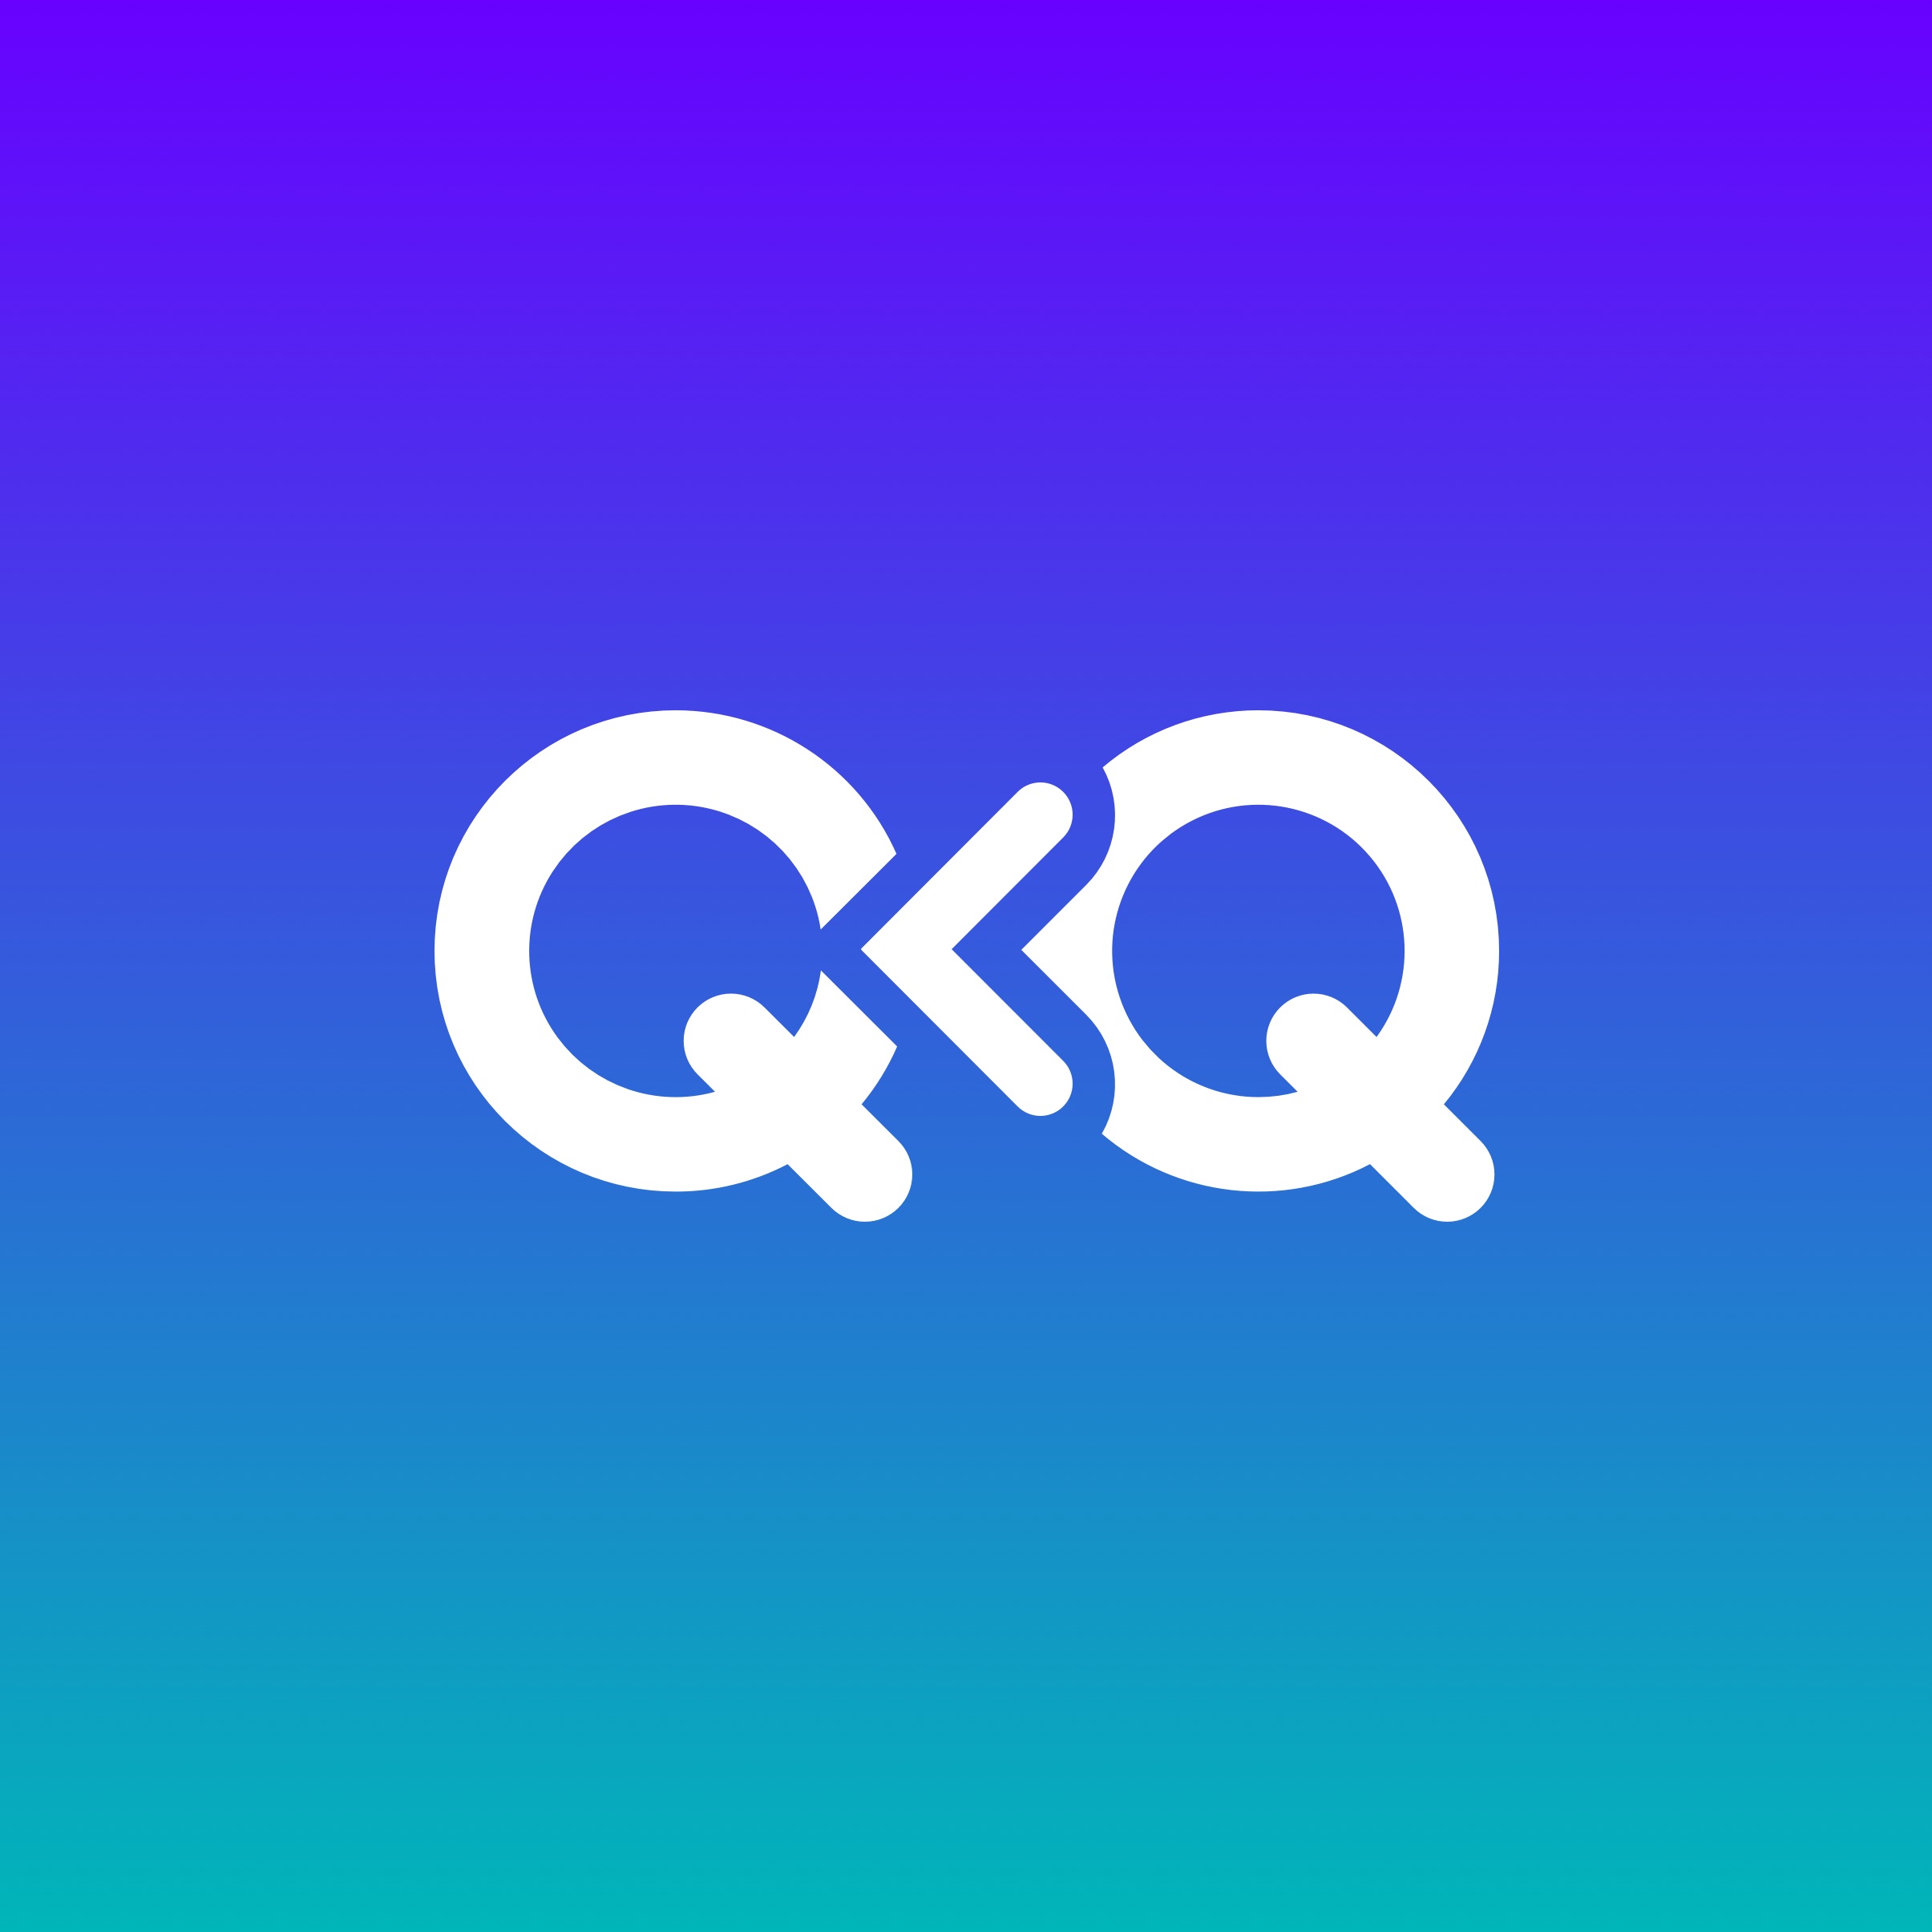 YQ Logo by Casper Creative